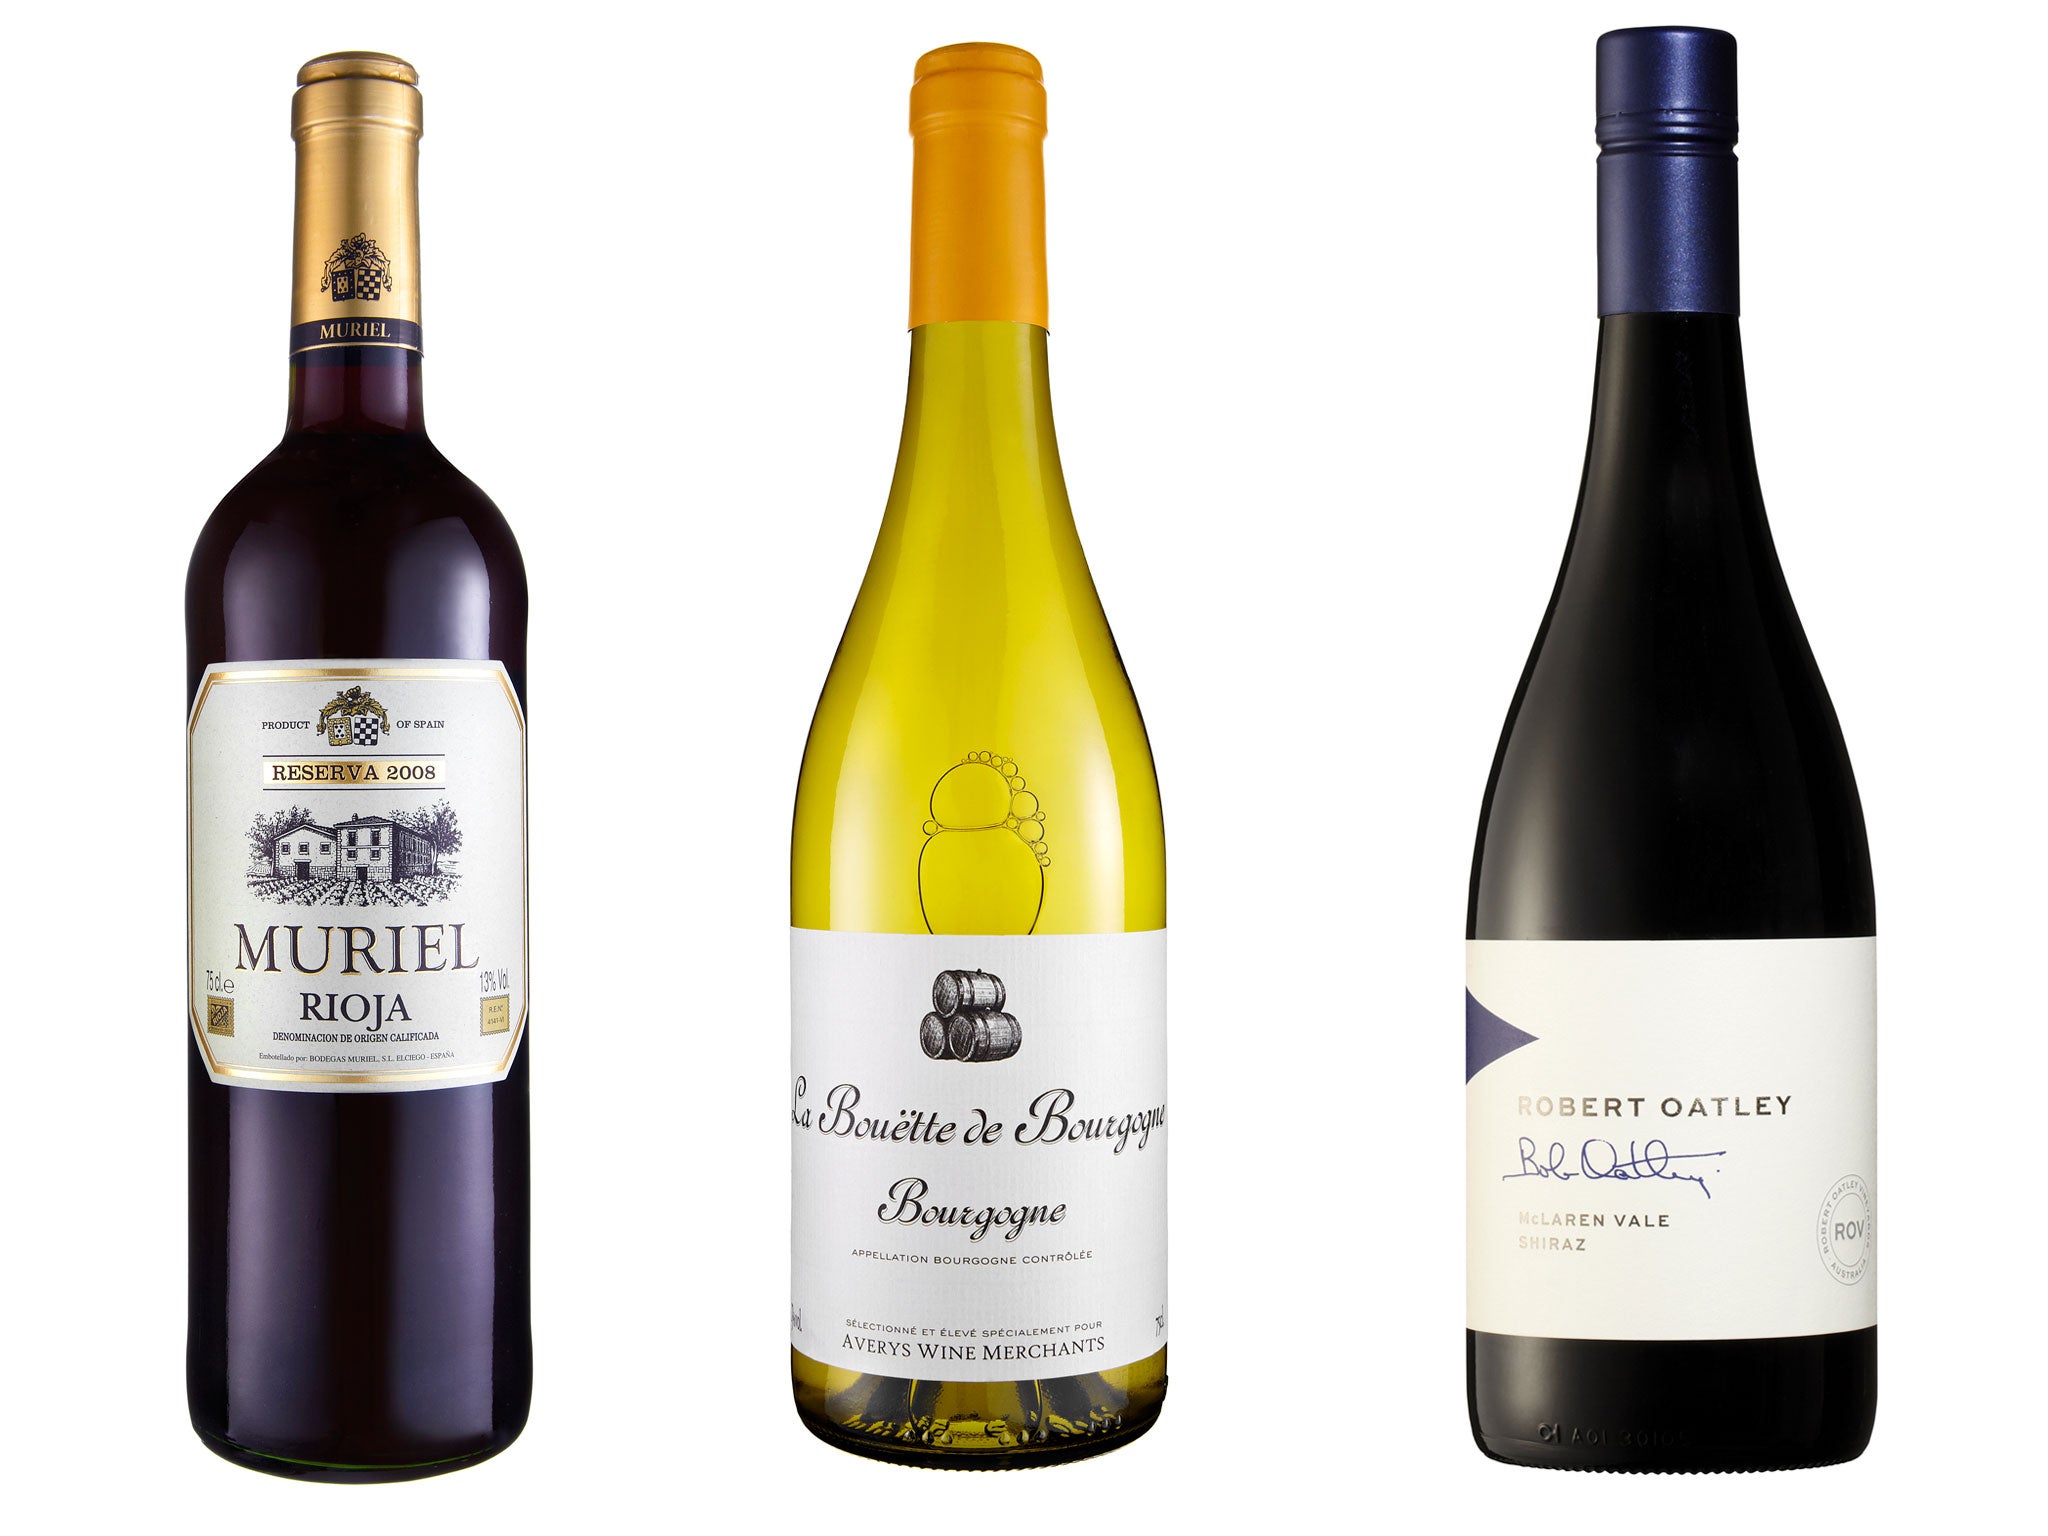 Muriel Reserva Rioja Alavesa; La Bouëtte de Bourgogne; 2011 Robert Oatley Shiraz, McLaren Vale